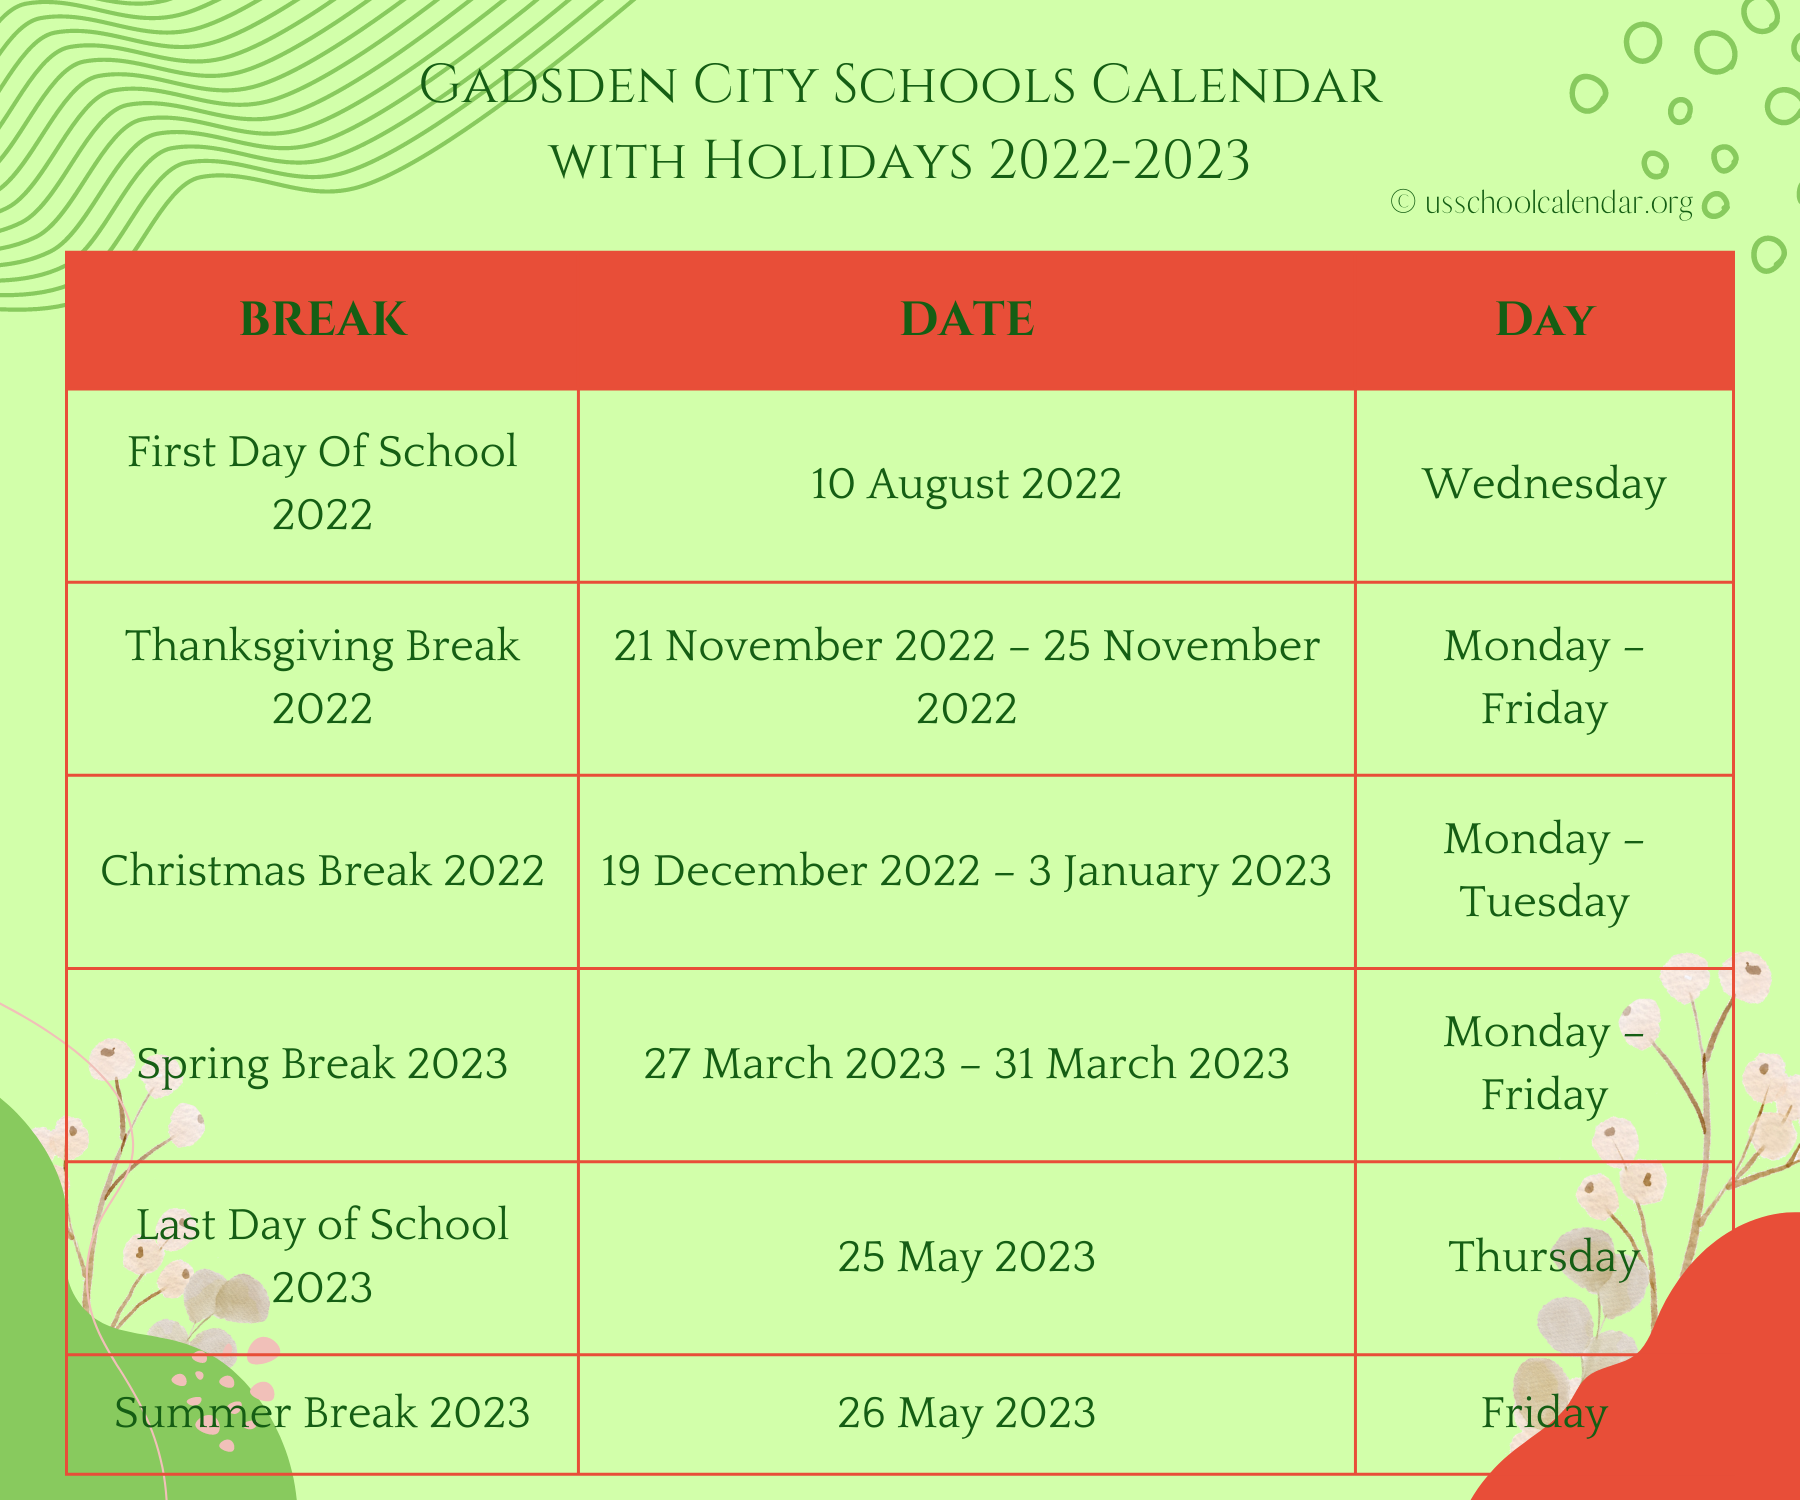 GCS Gadsden City Schools Calendar with Holidays 2022 2023